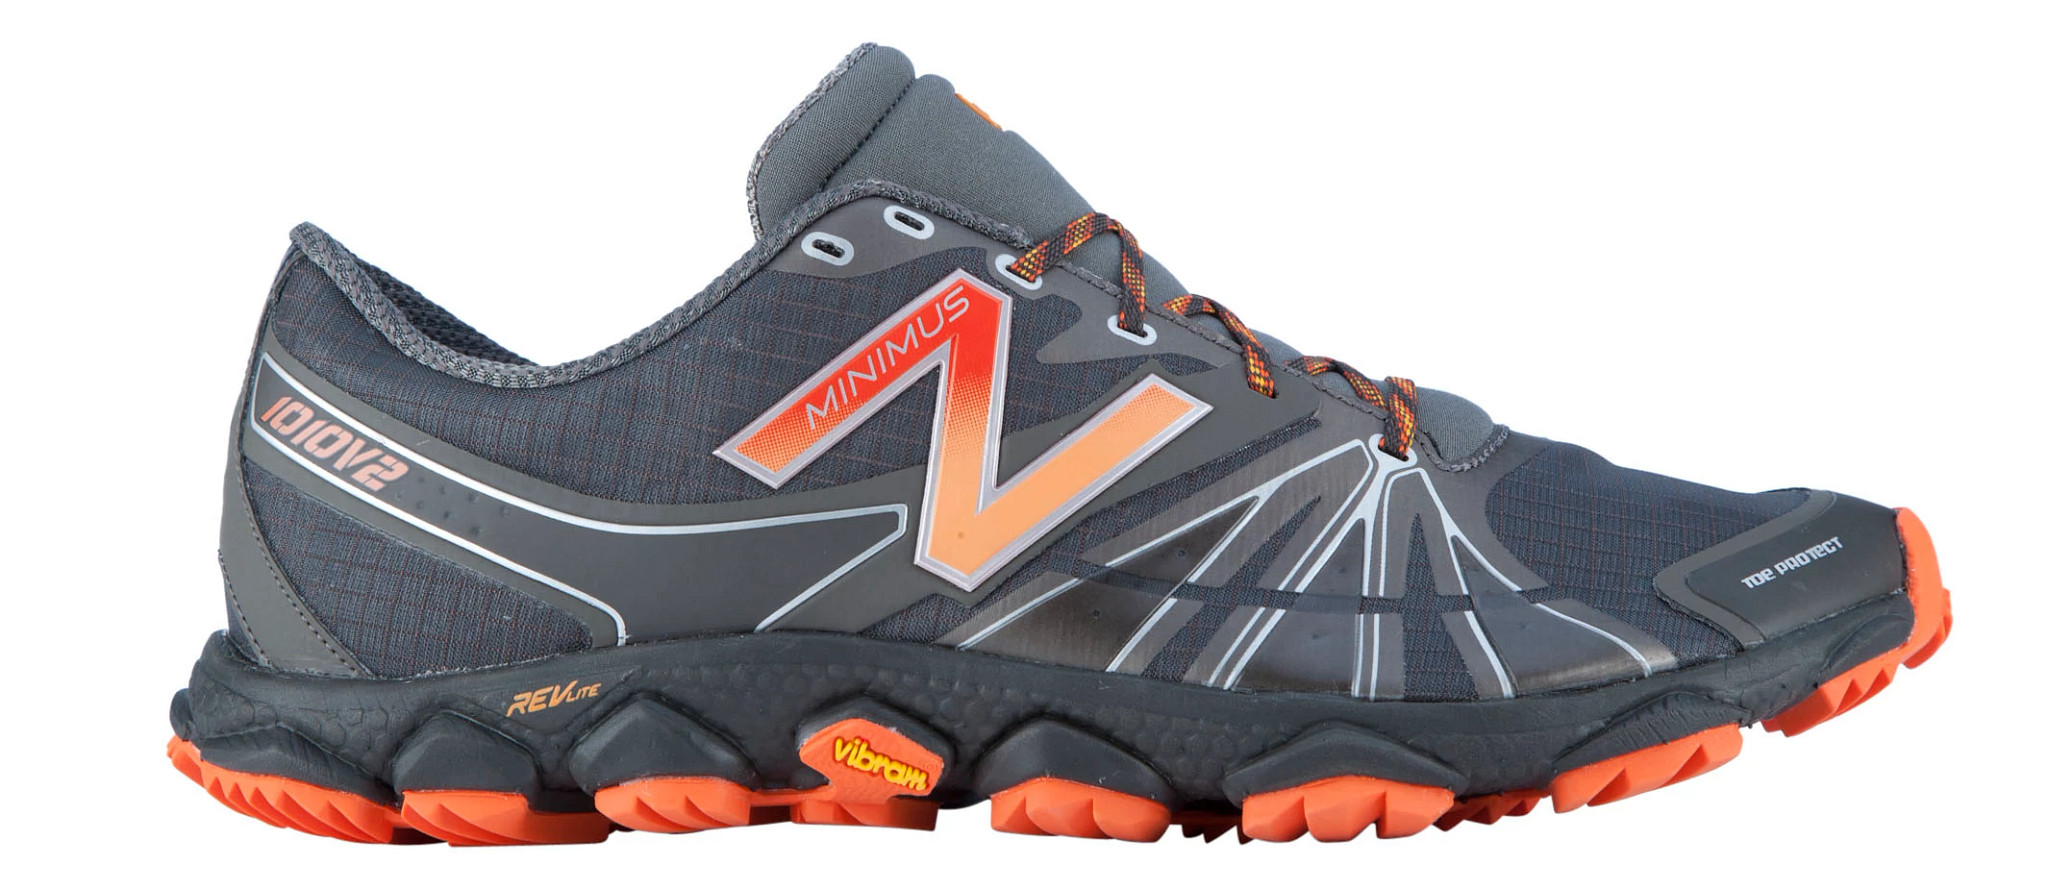 malicioso Disco gancho Mens New Balance Minimus 1010v2 Trail Running Shoe